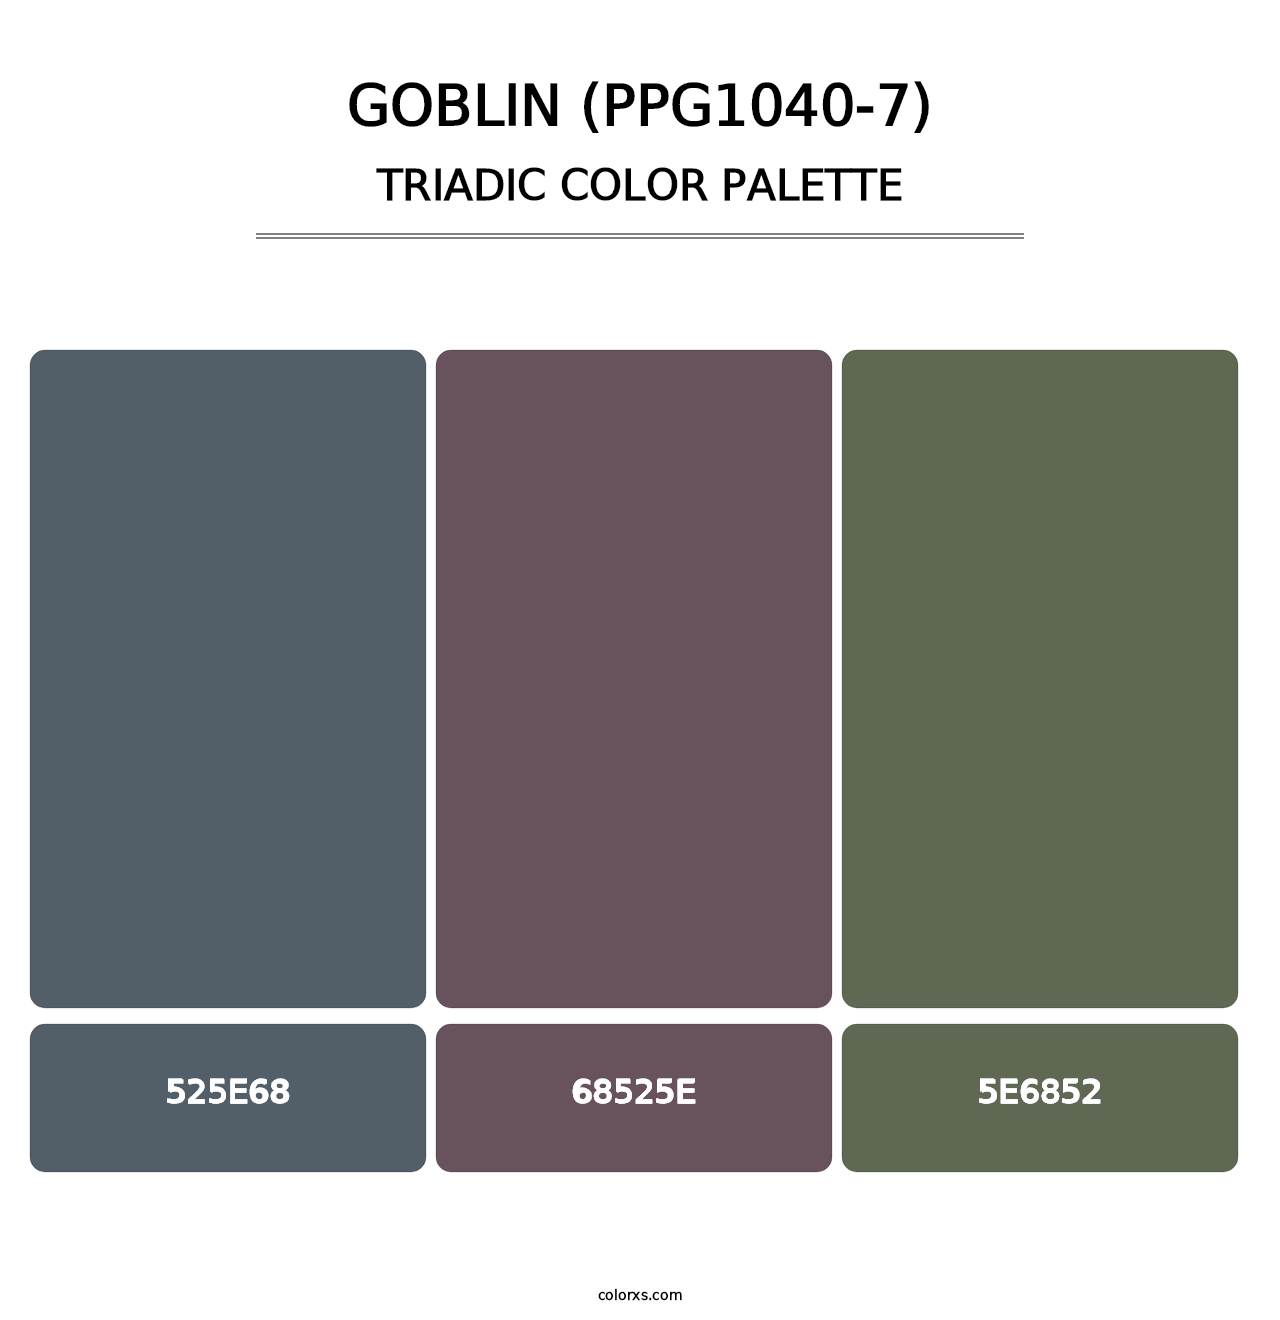 Goblin (PPG1040-7) - Triadic Color Palette